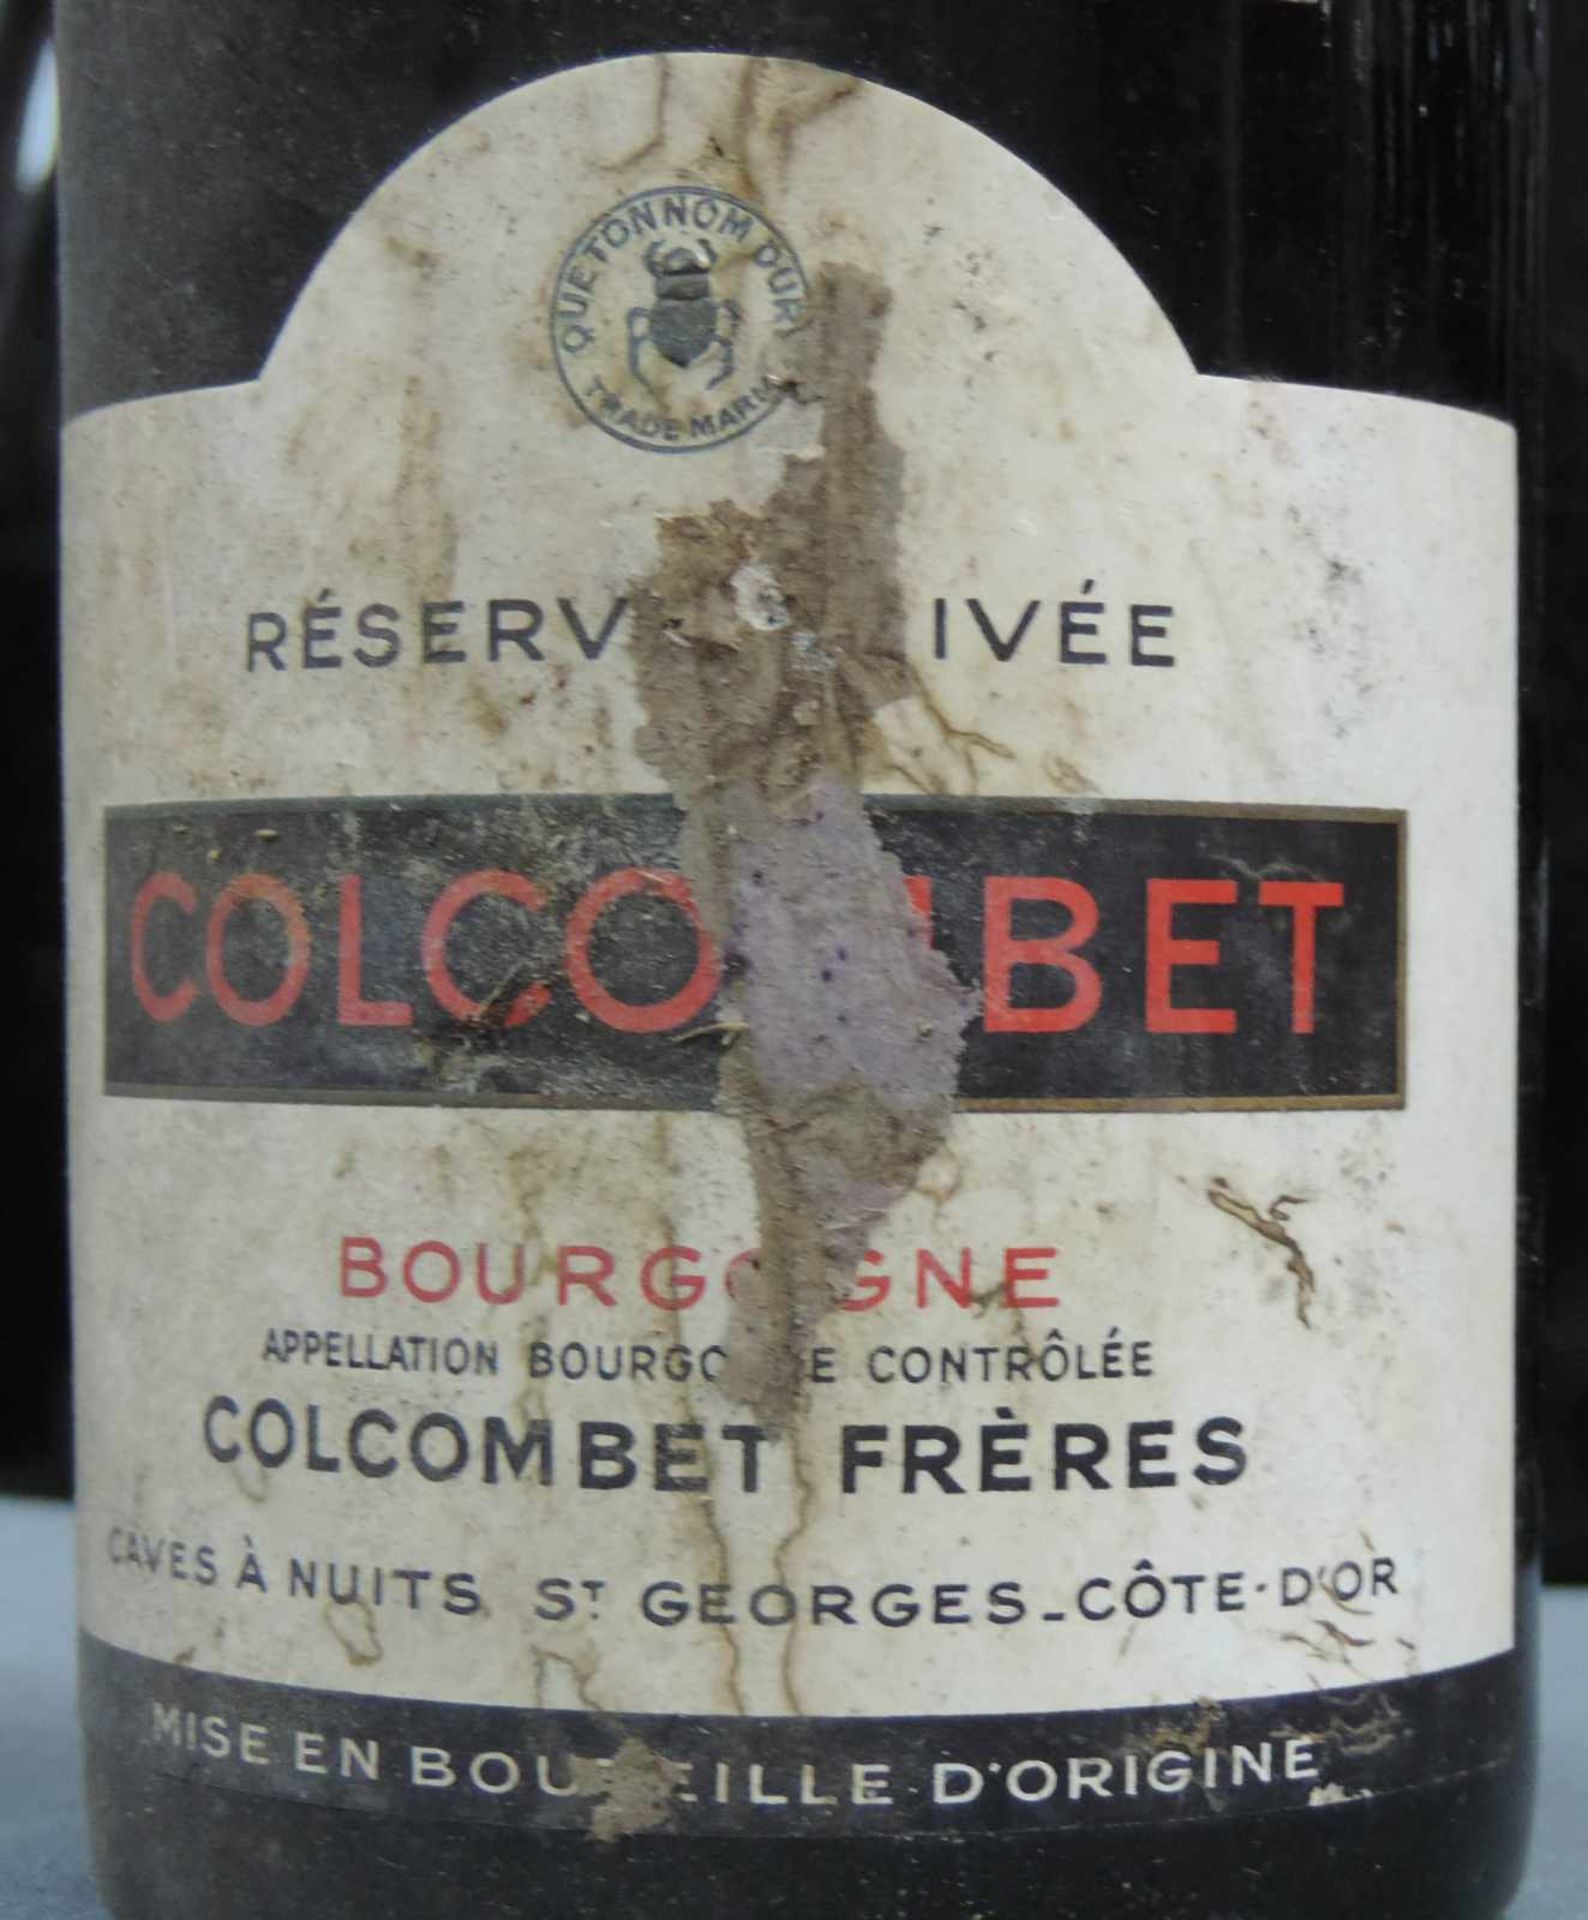 1937 Bourgogne AC von Colcombet Frères, caves à Nuits St. Georges. 49 ganze Flaschen. Reserve - Image 12 of 12